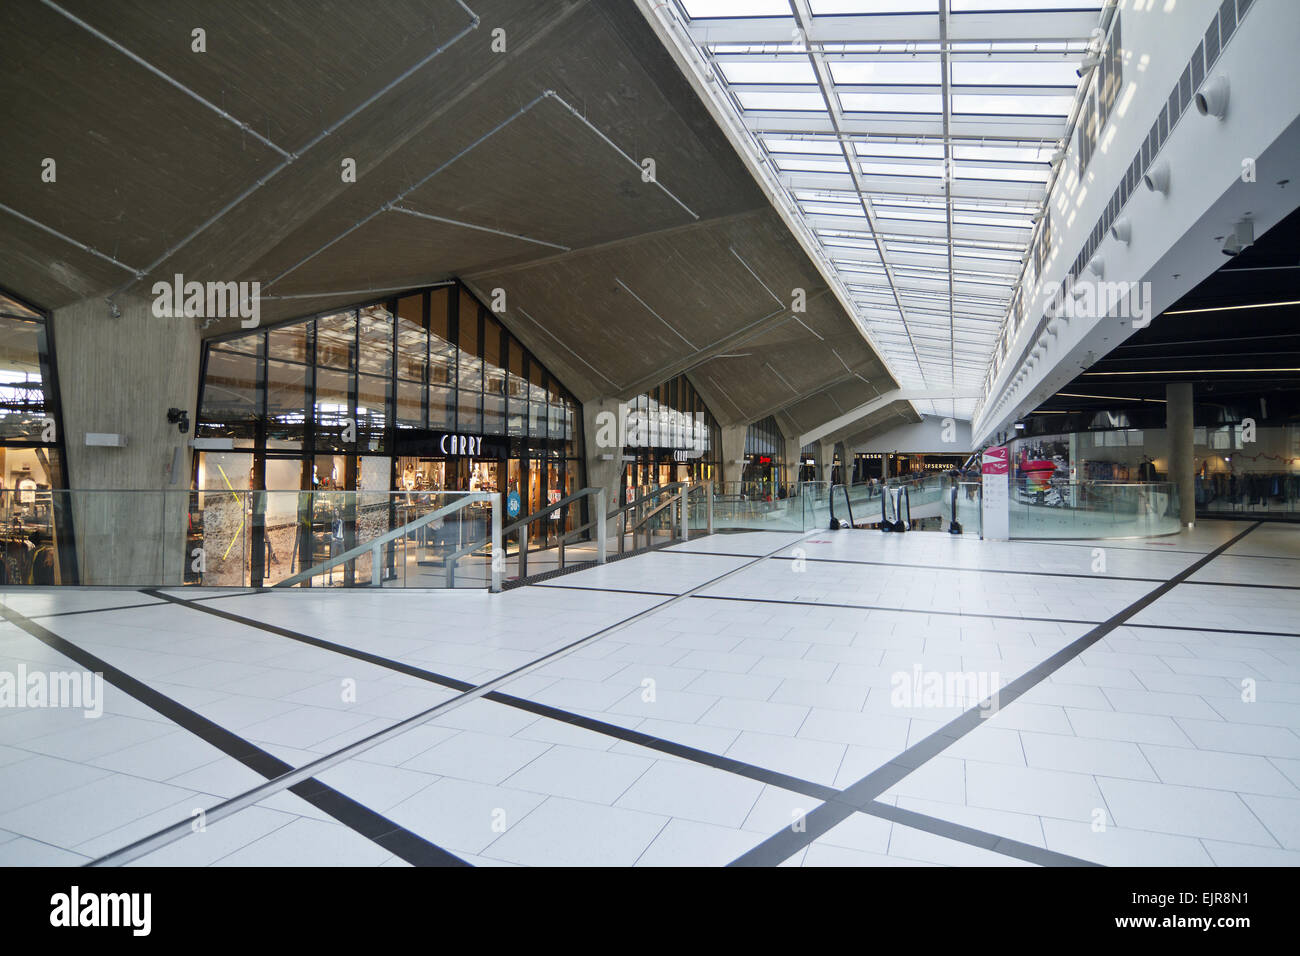 Galeria Katowicka - interior of shopping center in Katowice, Poland. Stock Photo